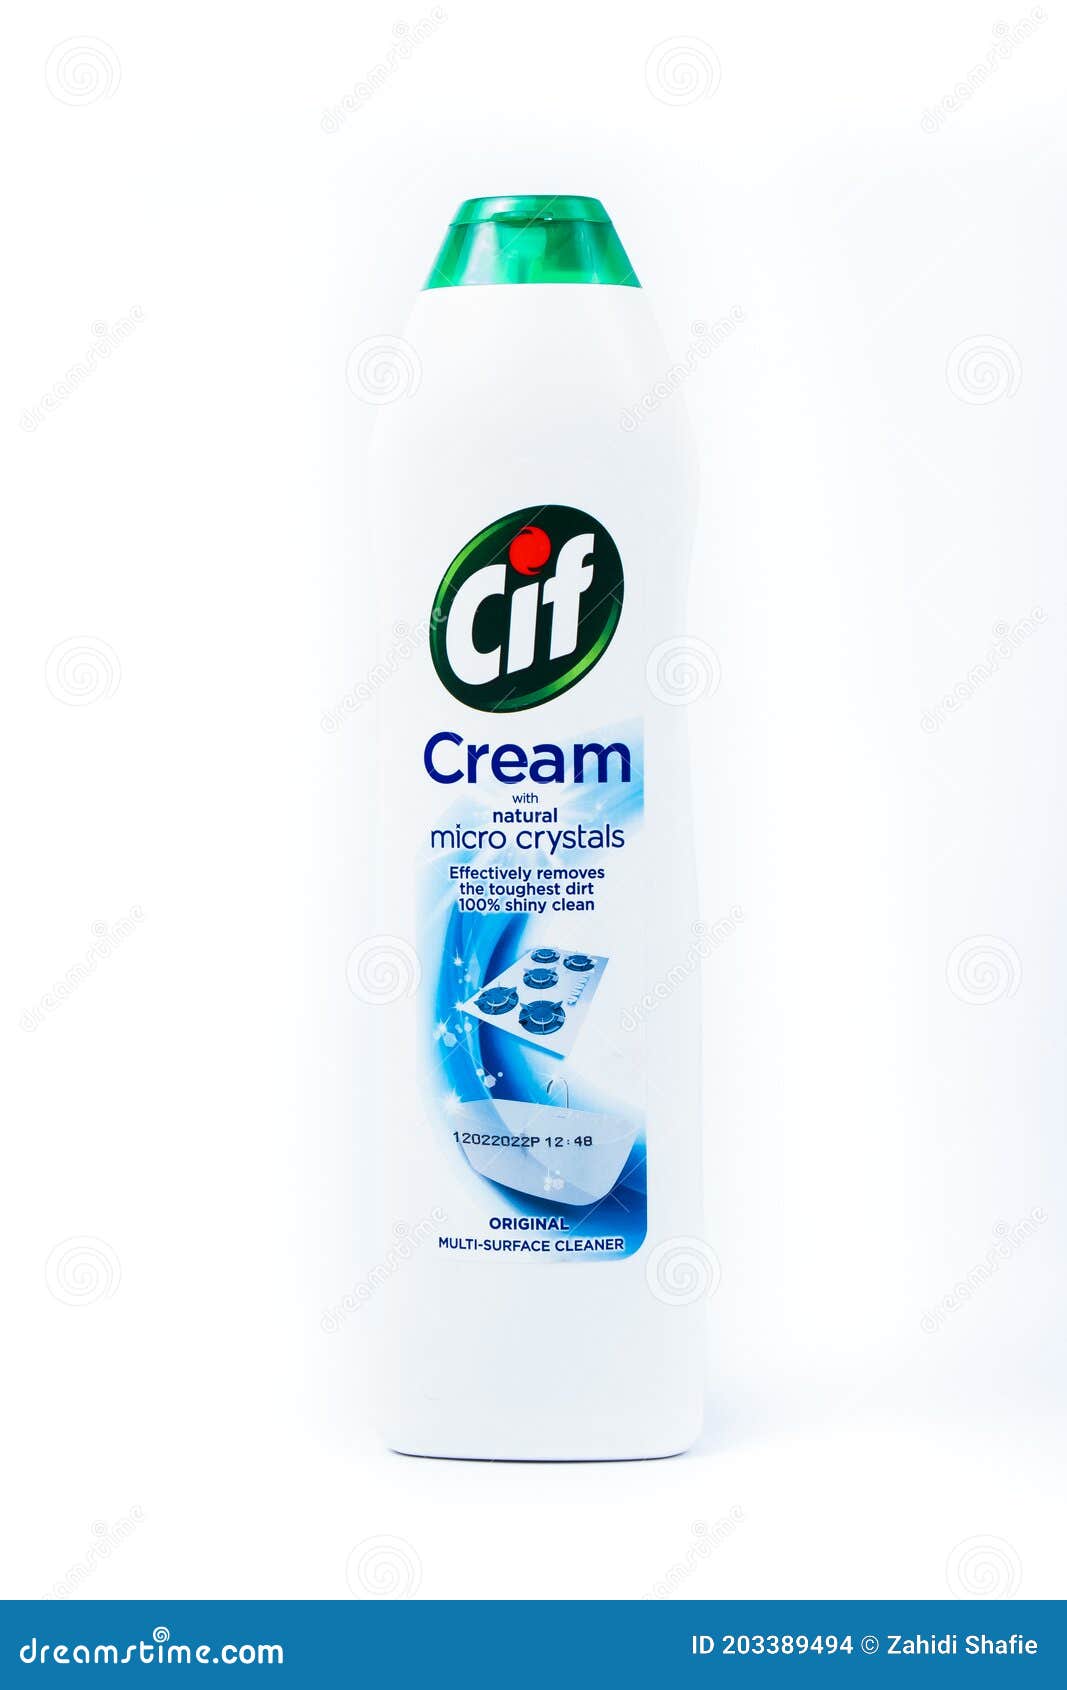 Cif Cream Cleaner, White 500ml